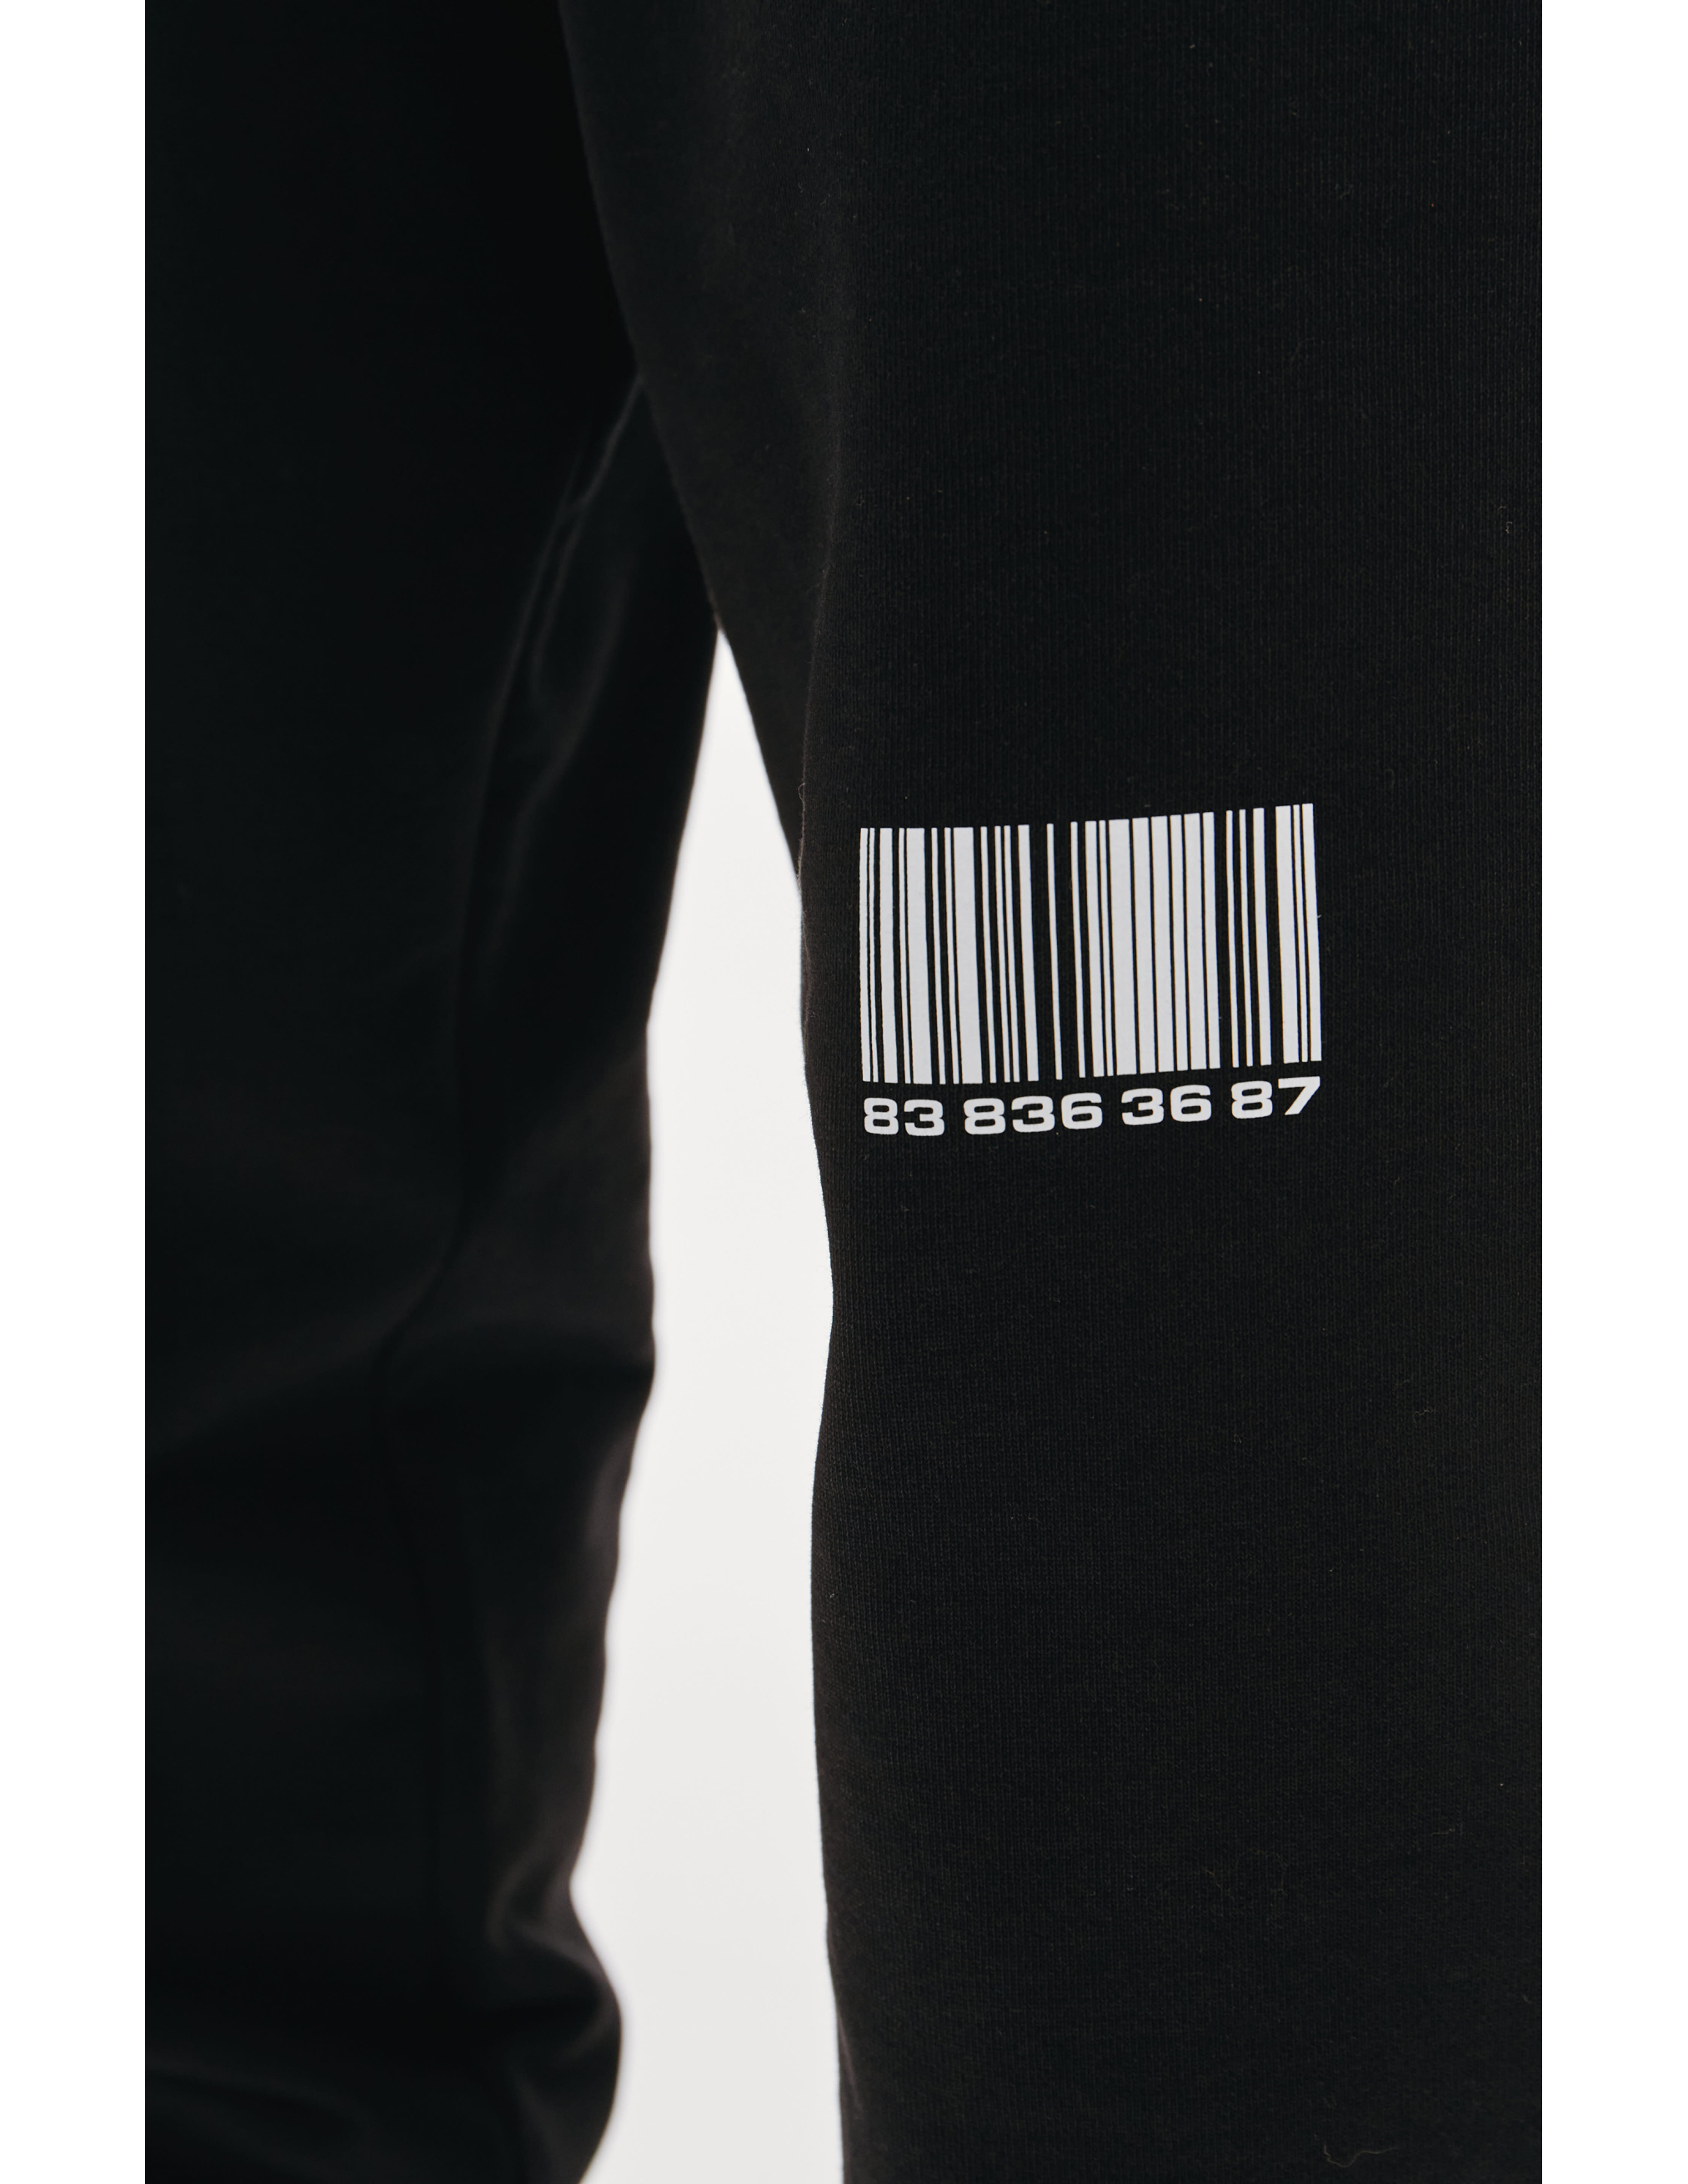 Спортивные брюки с принтом штрихкода VTMNTS VL12PA400B, размер XL;L;M;S - фото 4